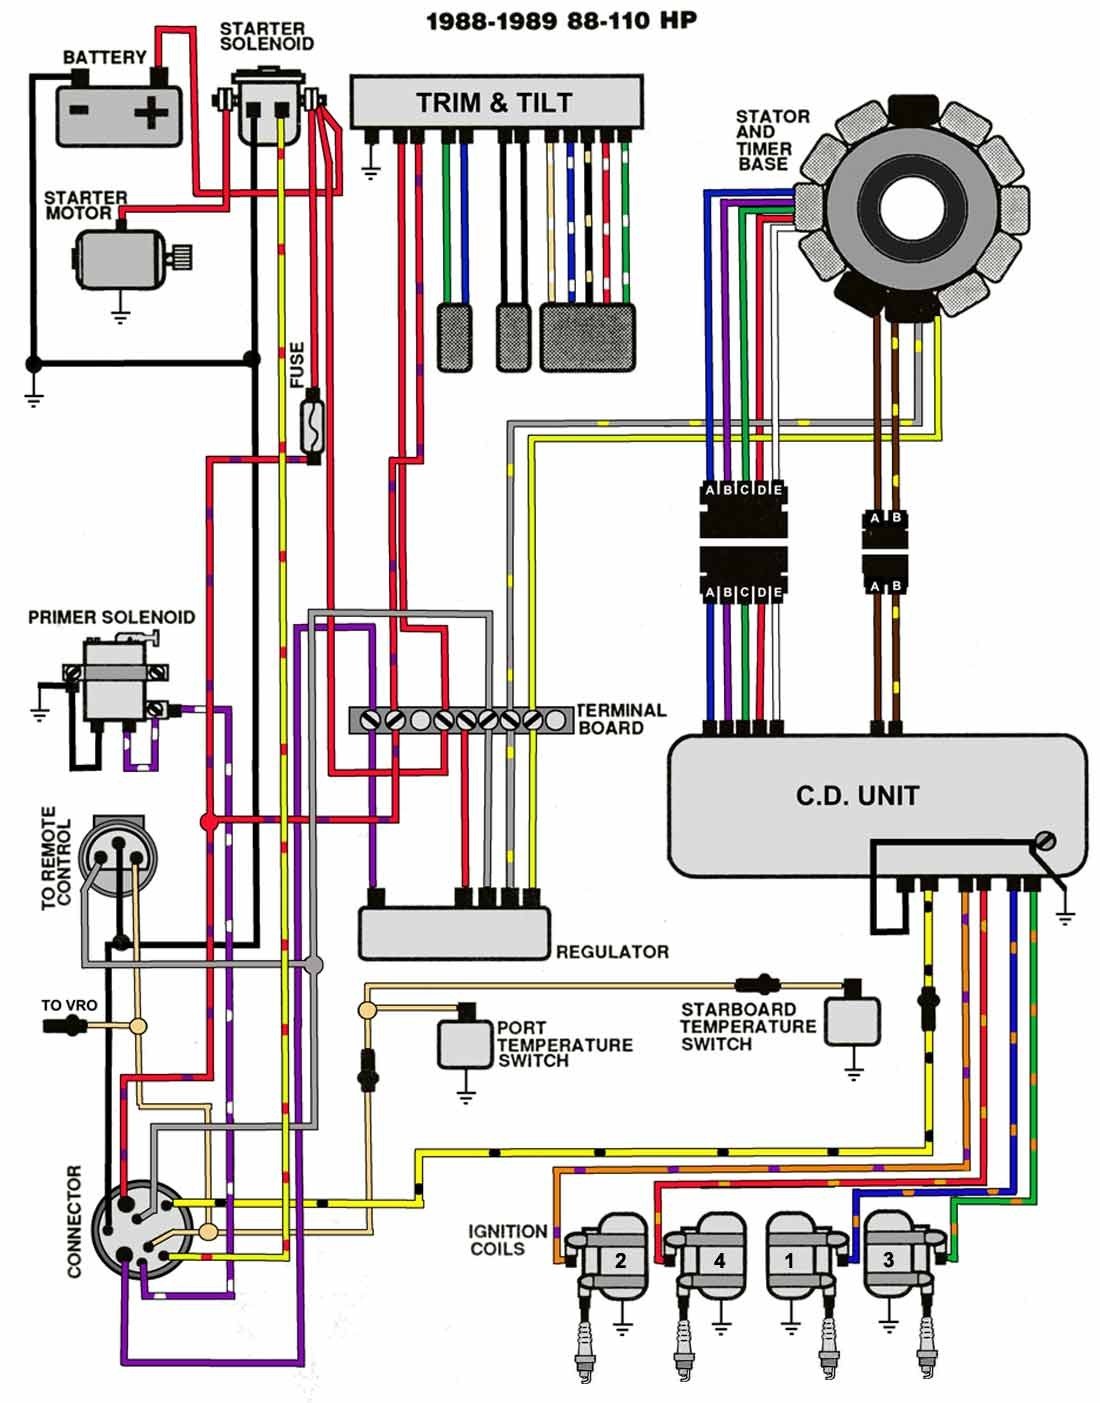 50 hp johnson outboard wiring diagram moreover 90 hp johnson rh 107 191 48 167